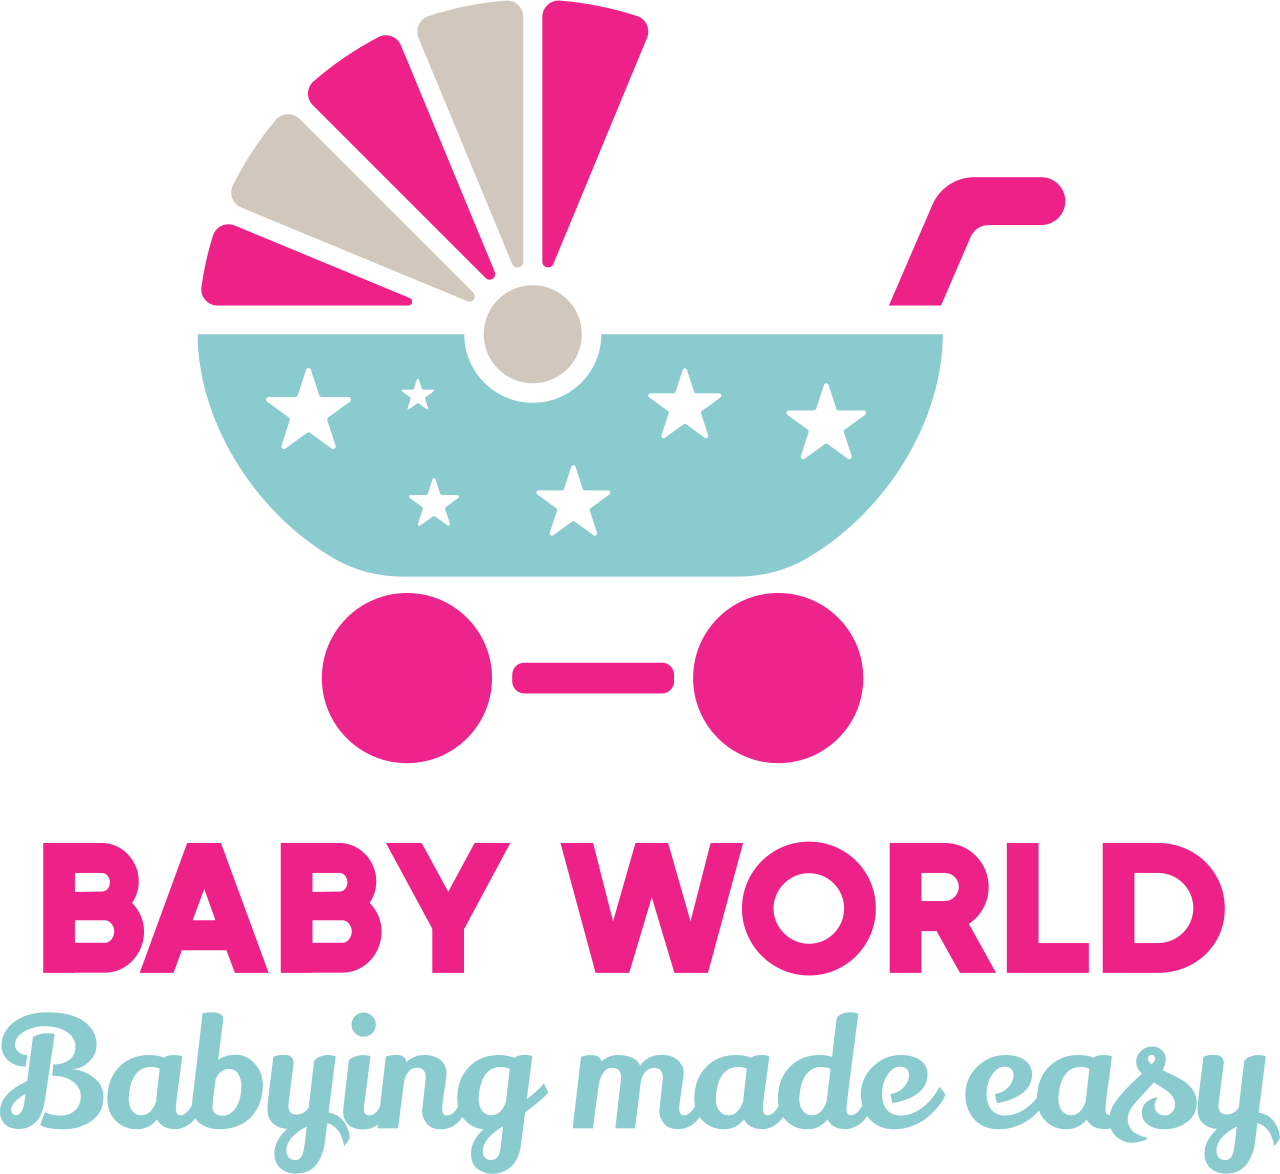 Baby World's logo